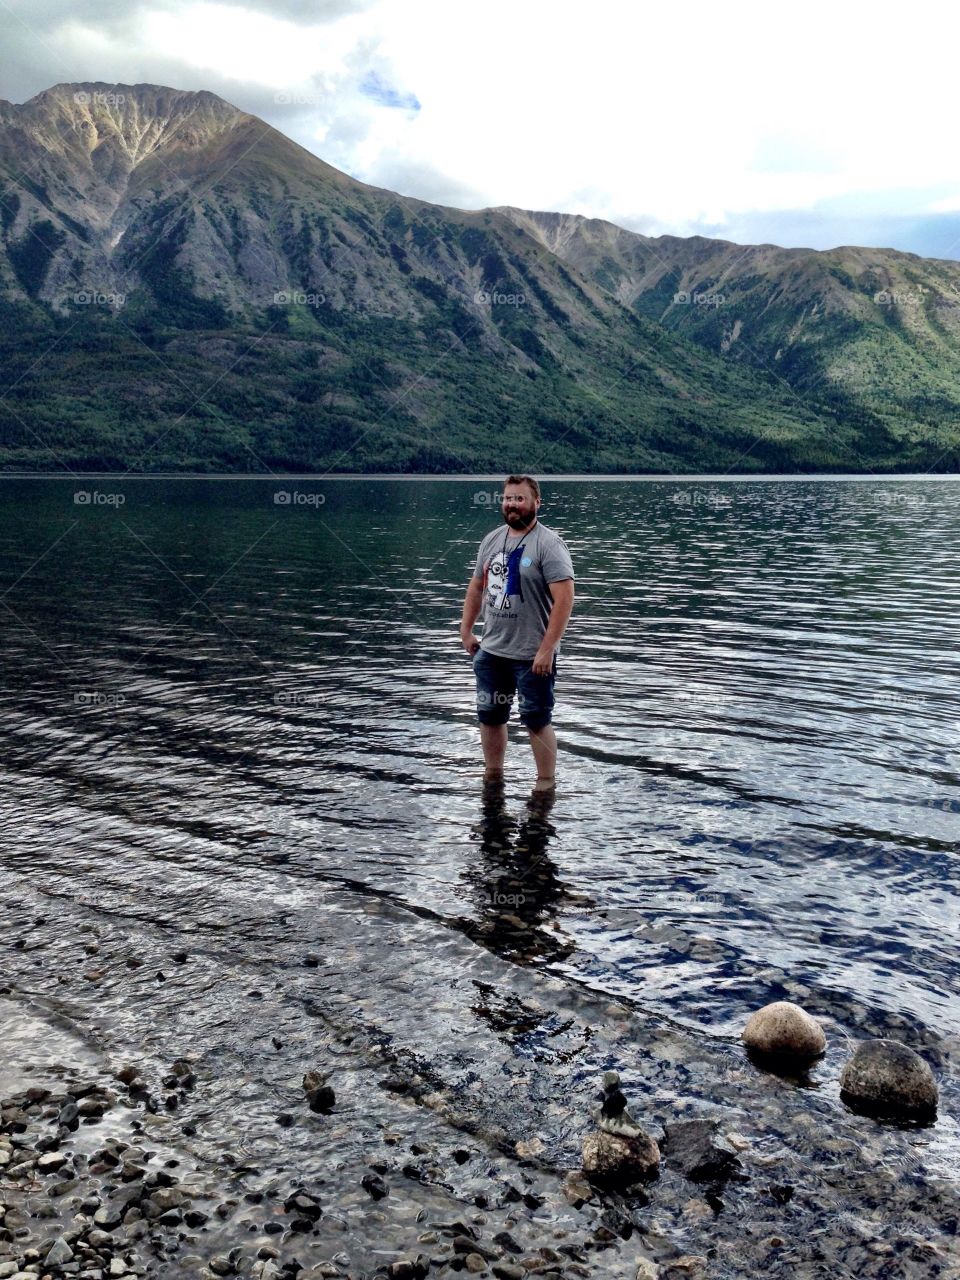 Skipping rocks and wading in lake Tutshi
Yukon Ca 